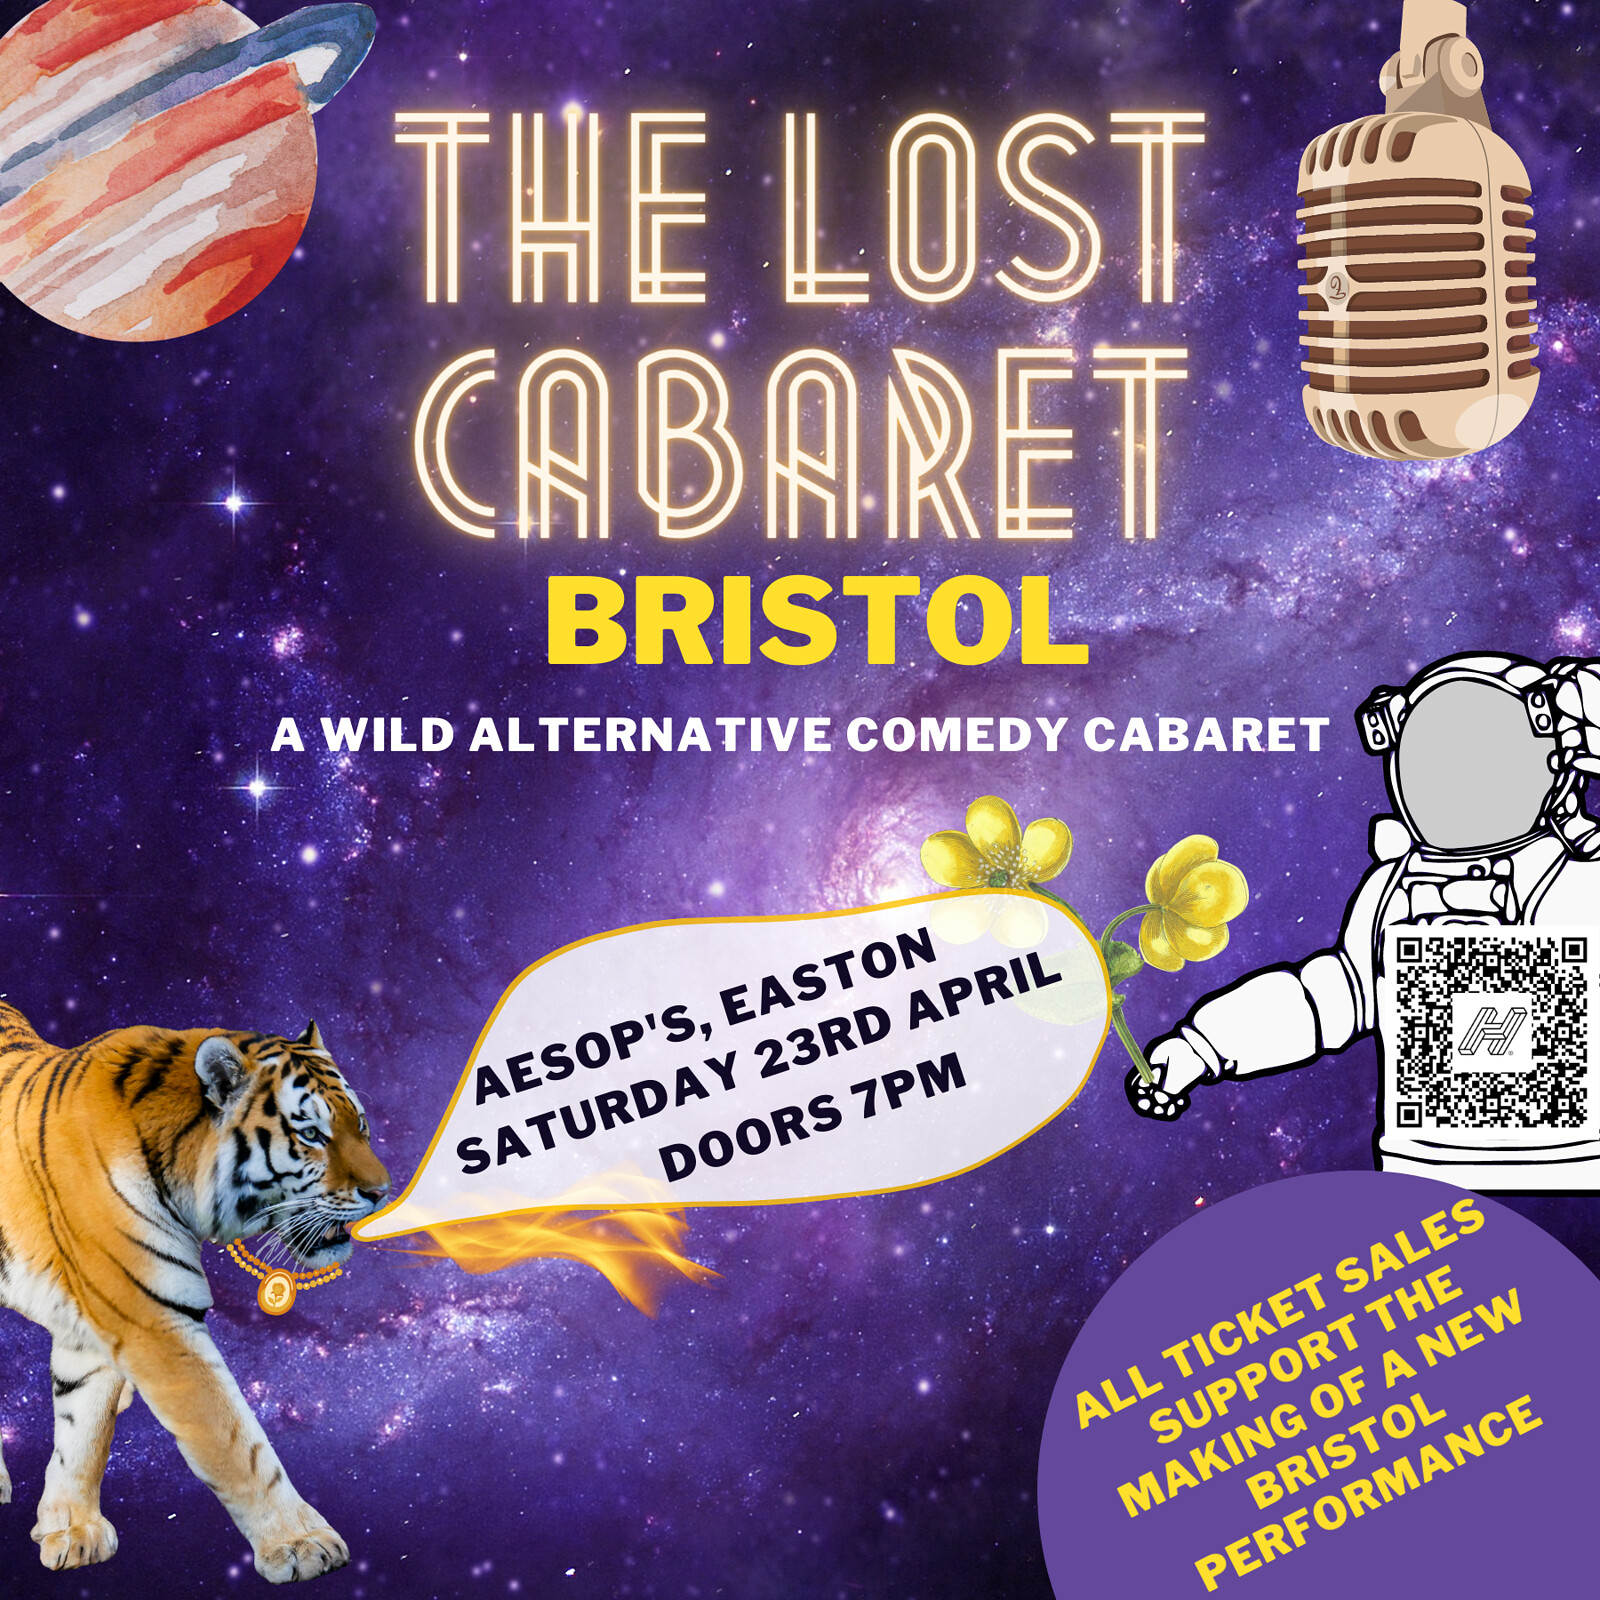 The Lost Cabaret Bristol at Aesop's, 114 St Marks Road